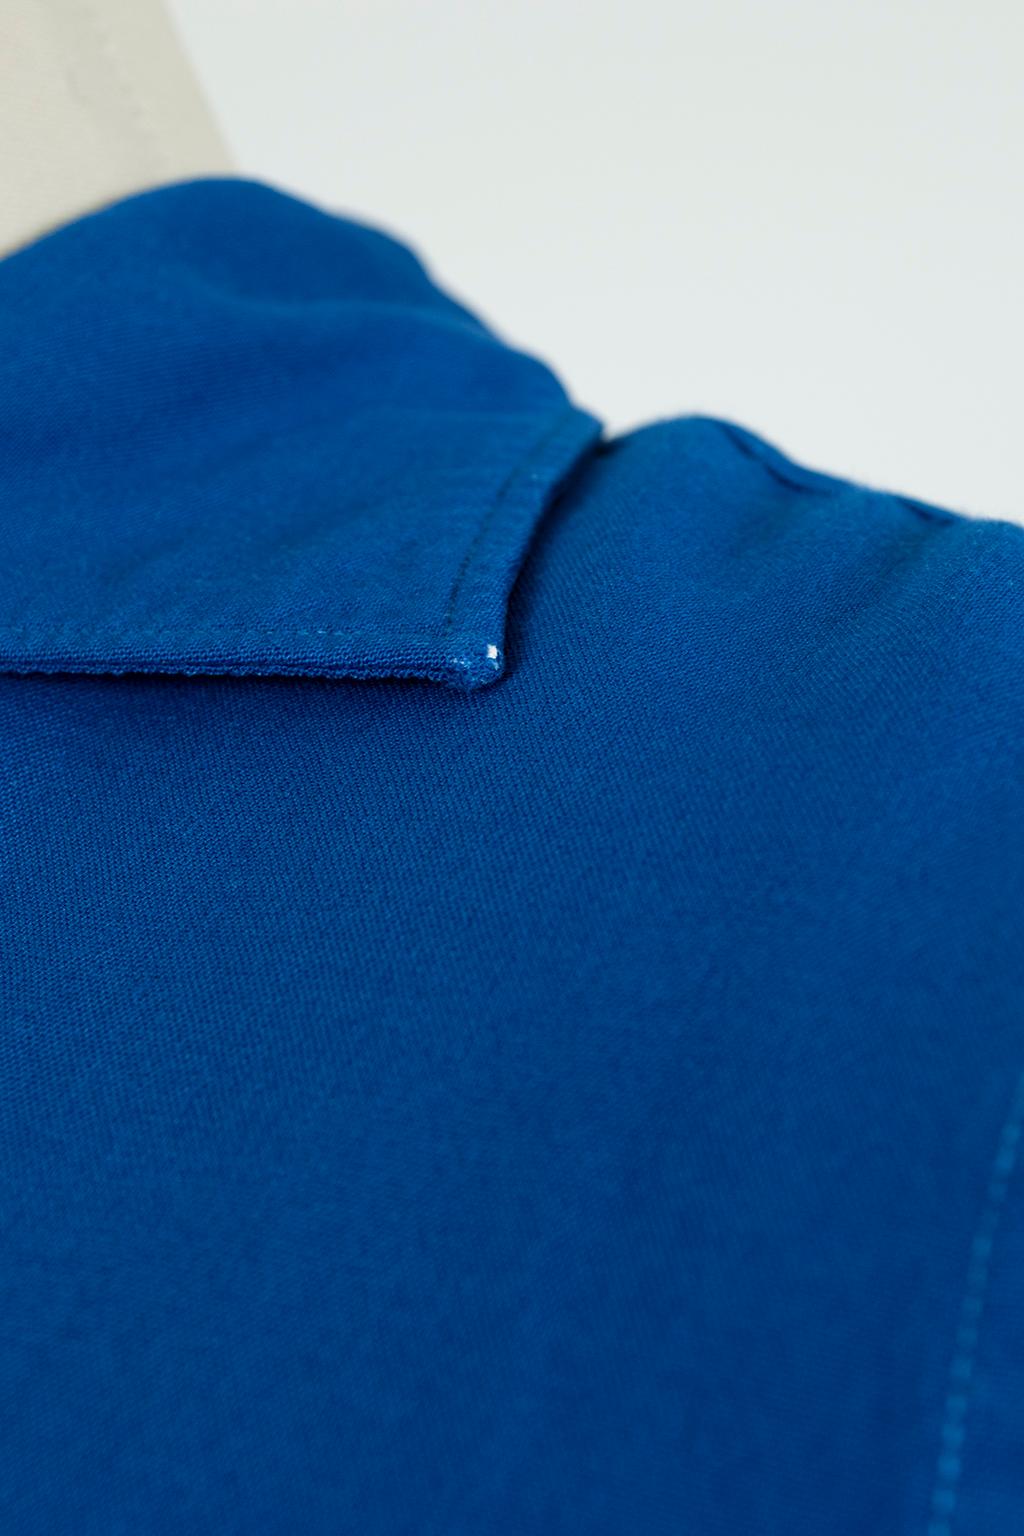 Men’s King Louie Ten Strike Royal Blue Bowling Shirt – Medium, 1950s For Sale 2